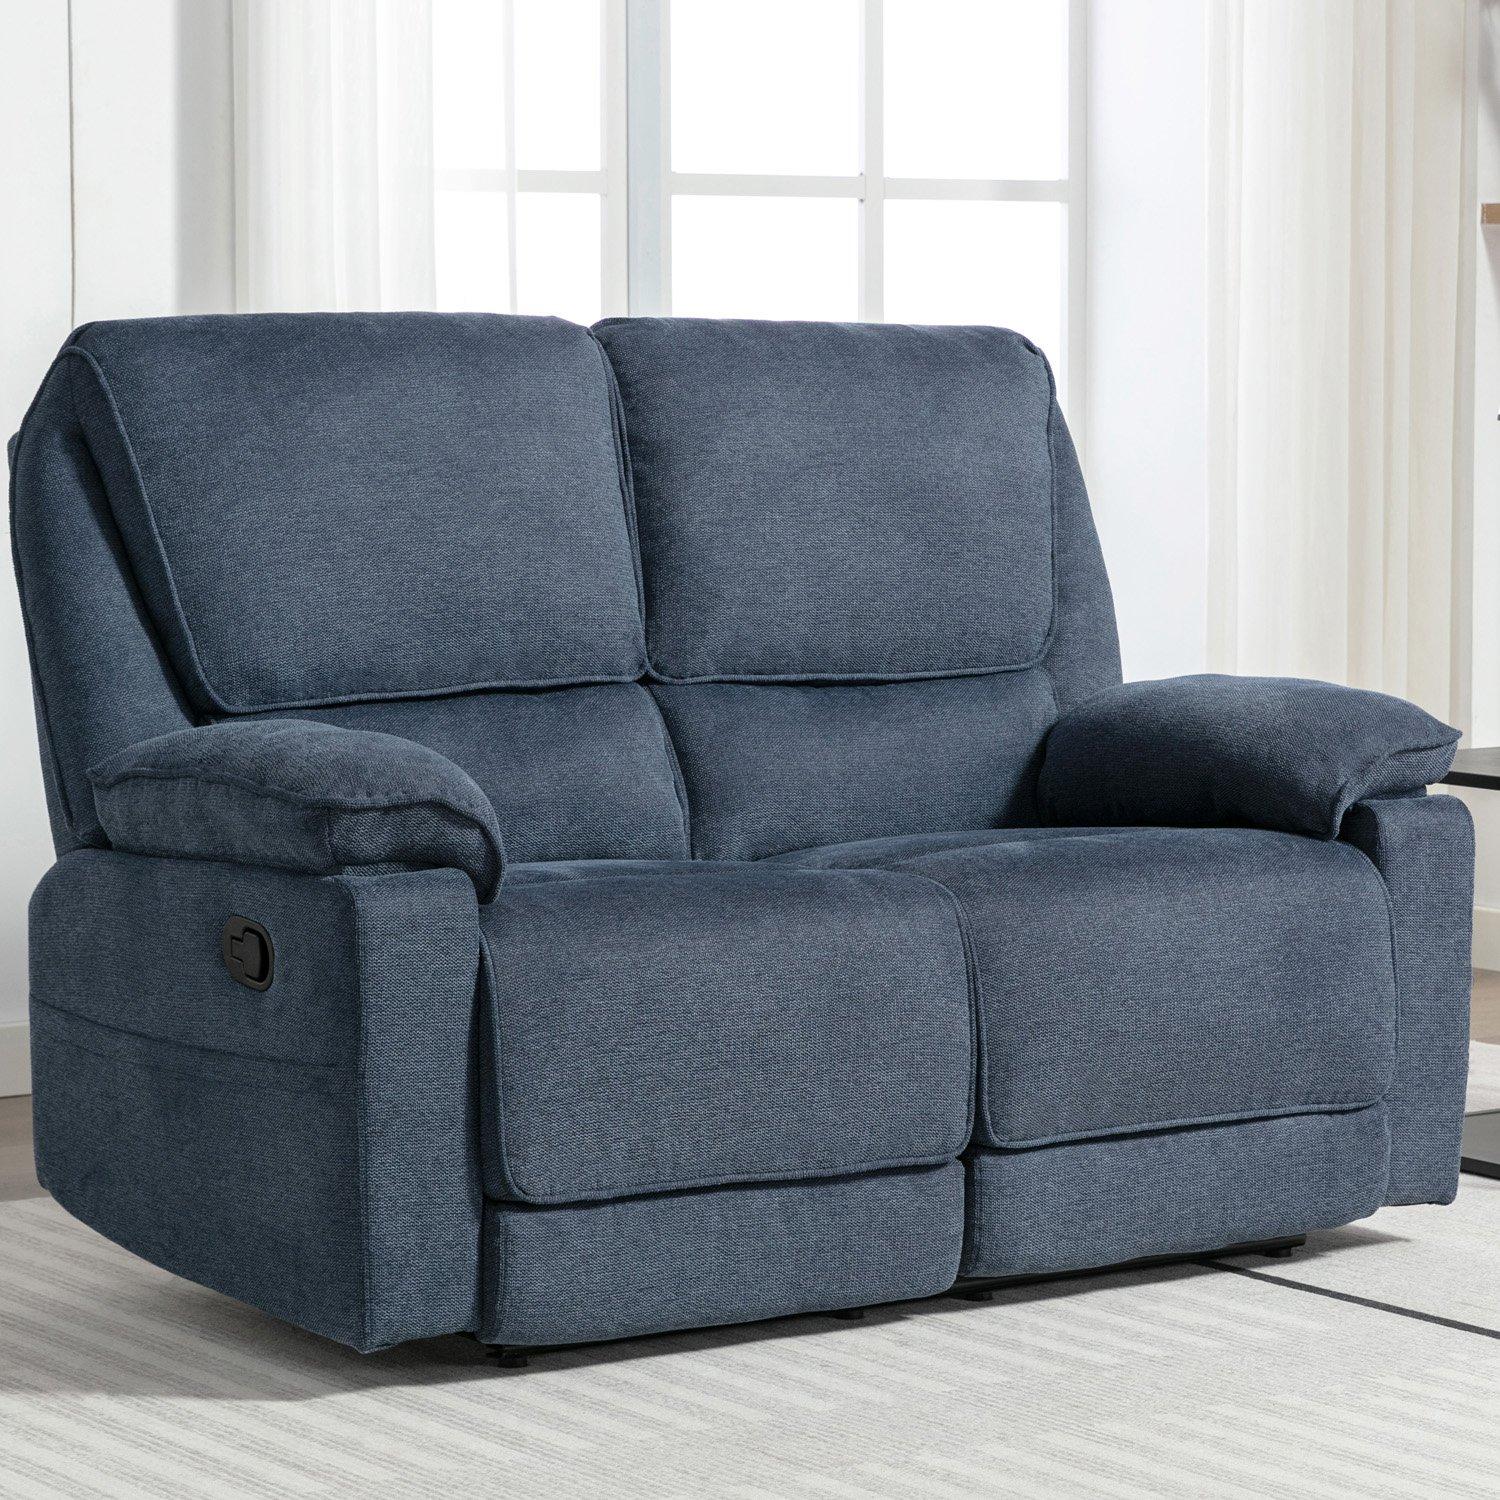 Sydney 2 Seater Fabric Manual Recliner Sofa